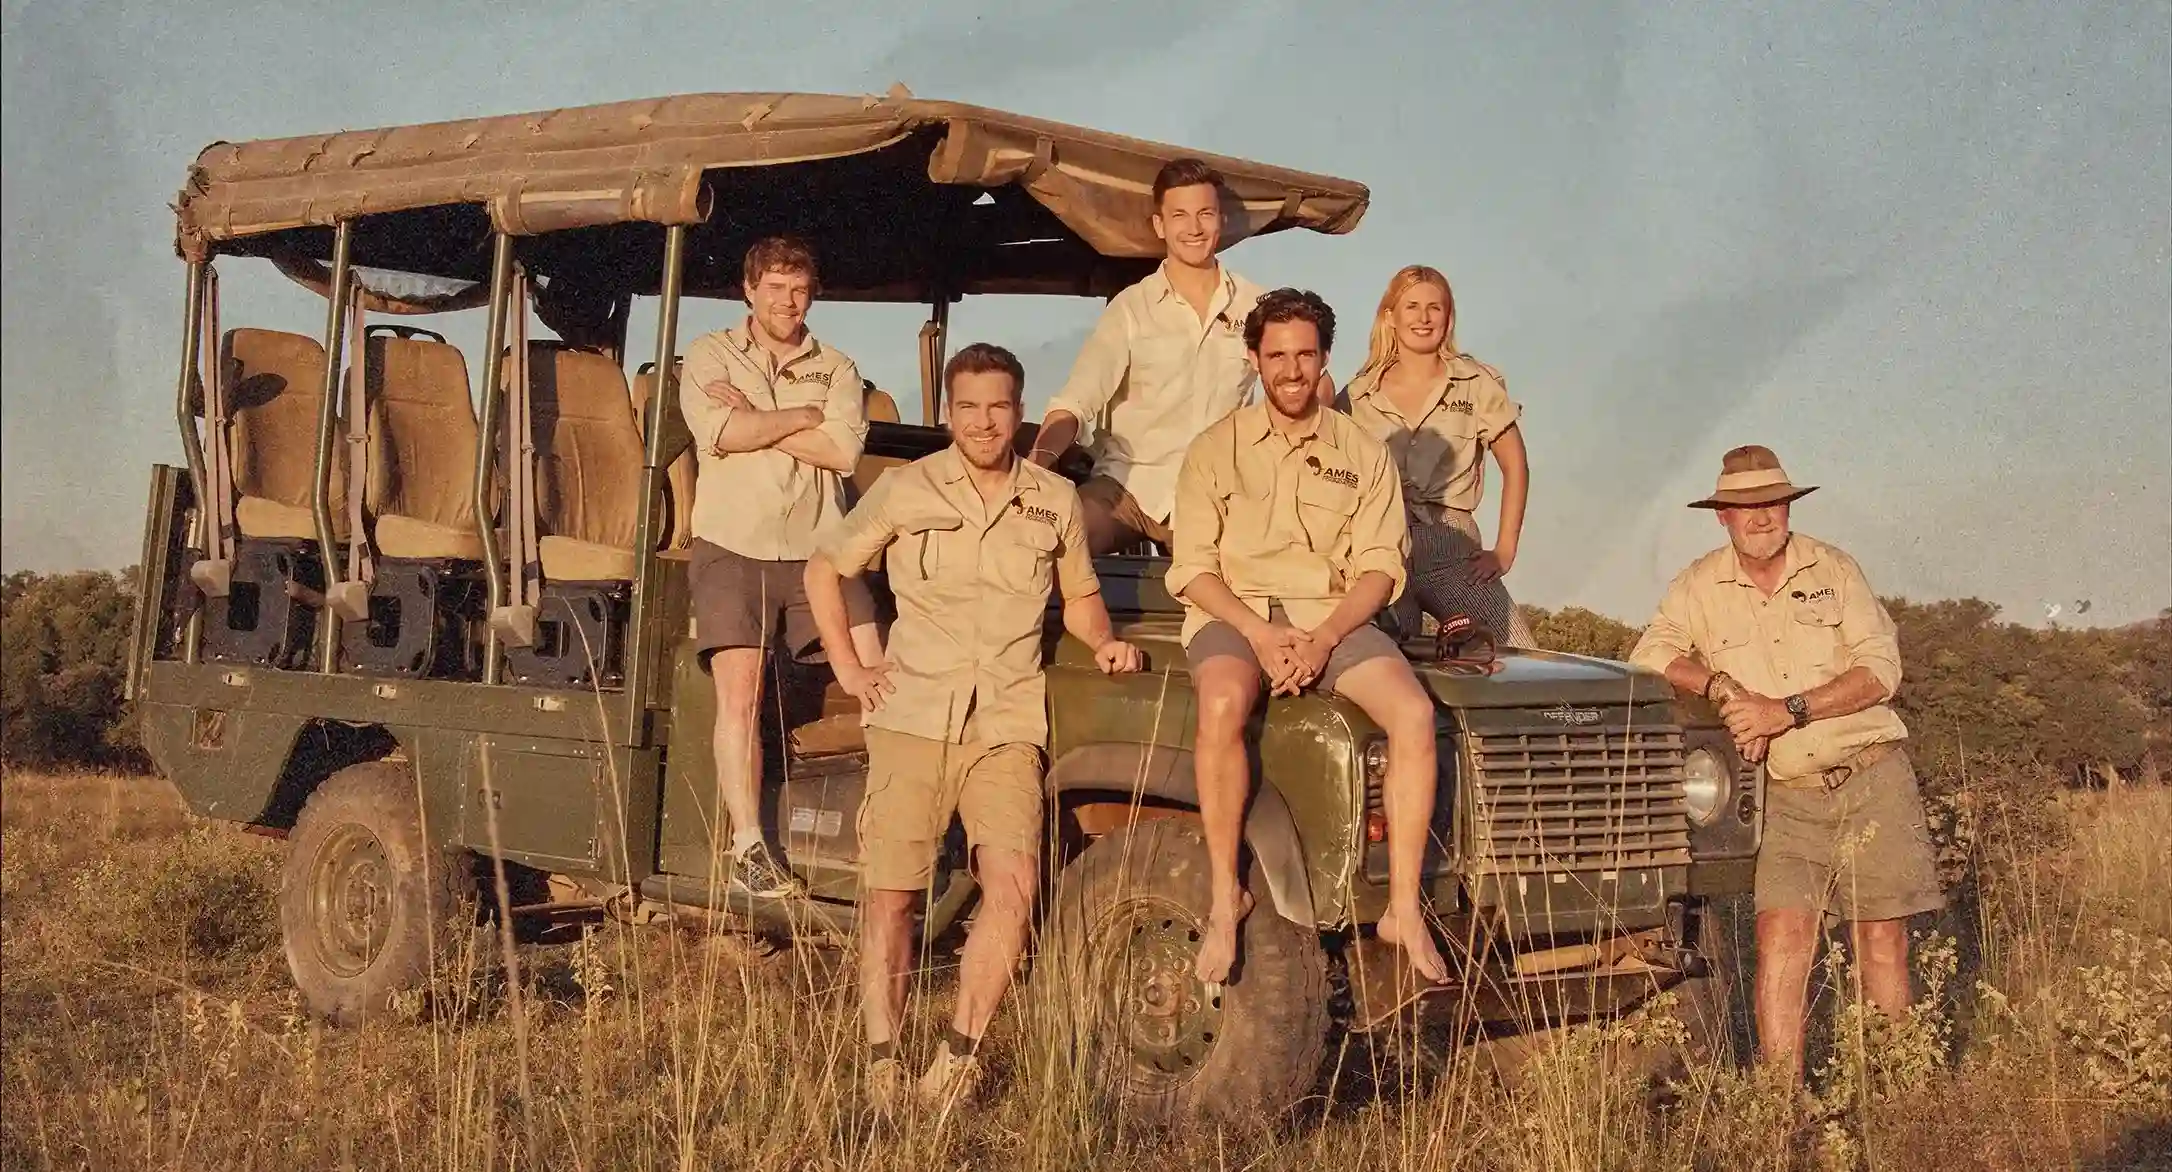 Team picture with safari jeep